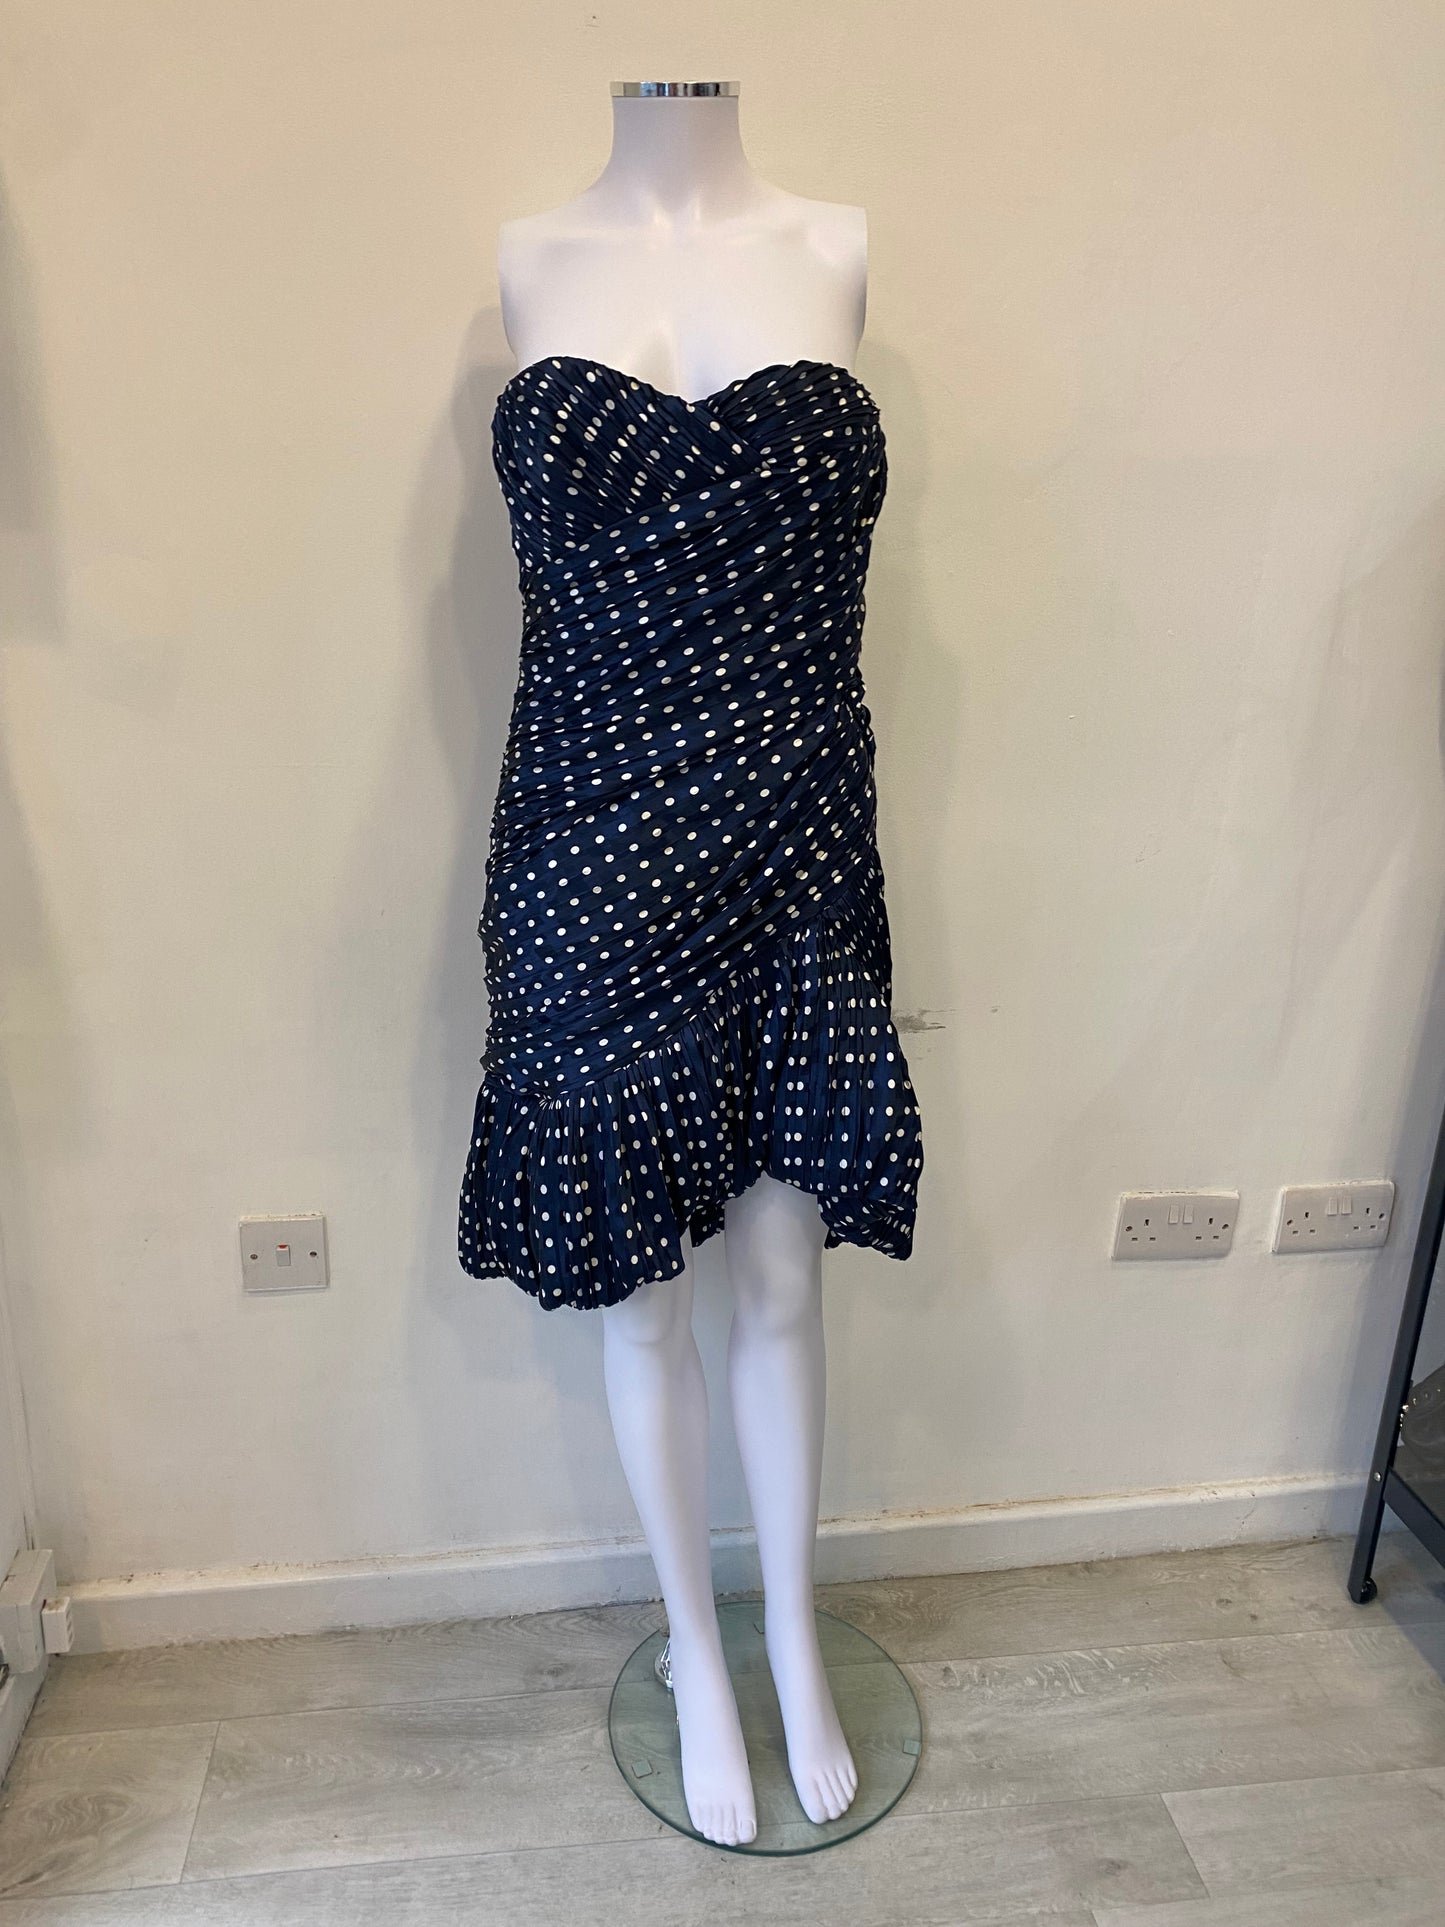 Tory Burch Strapless Navy Spot Dress Size 12